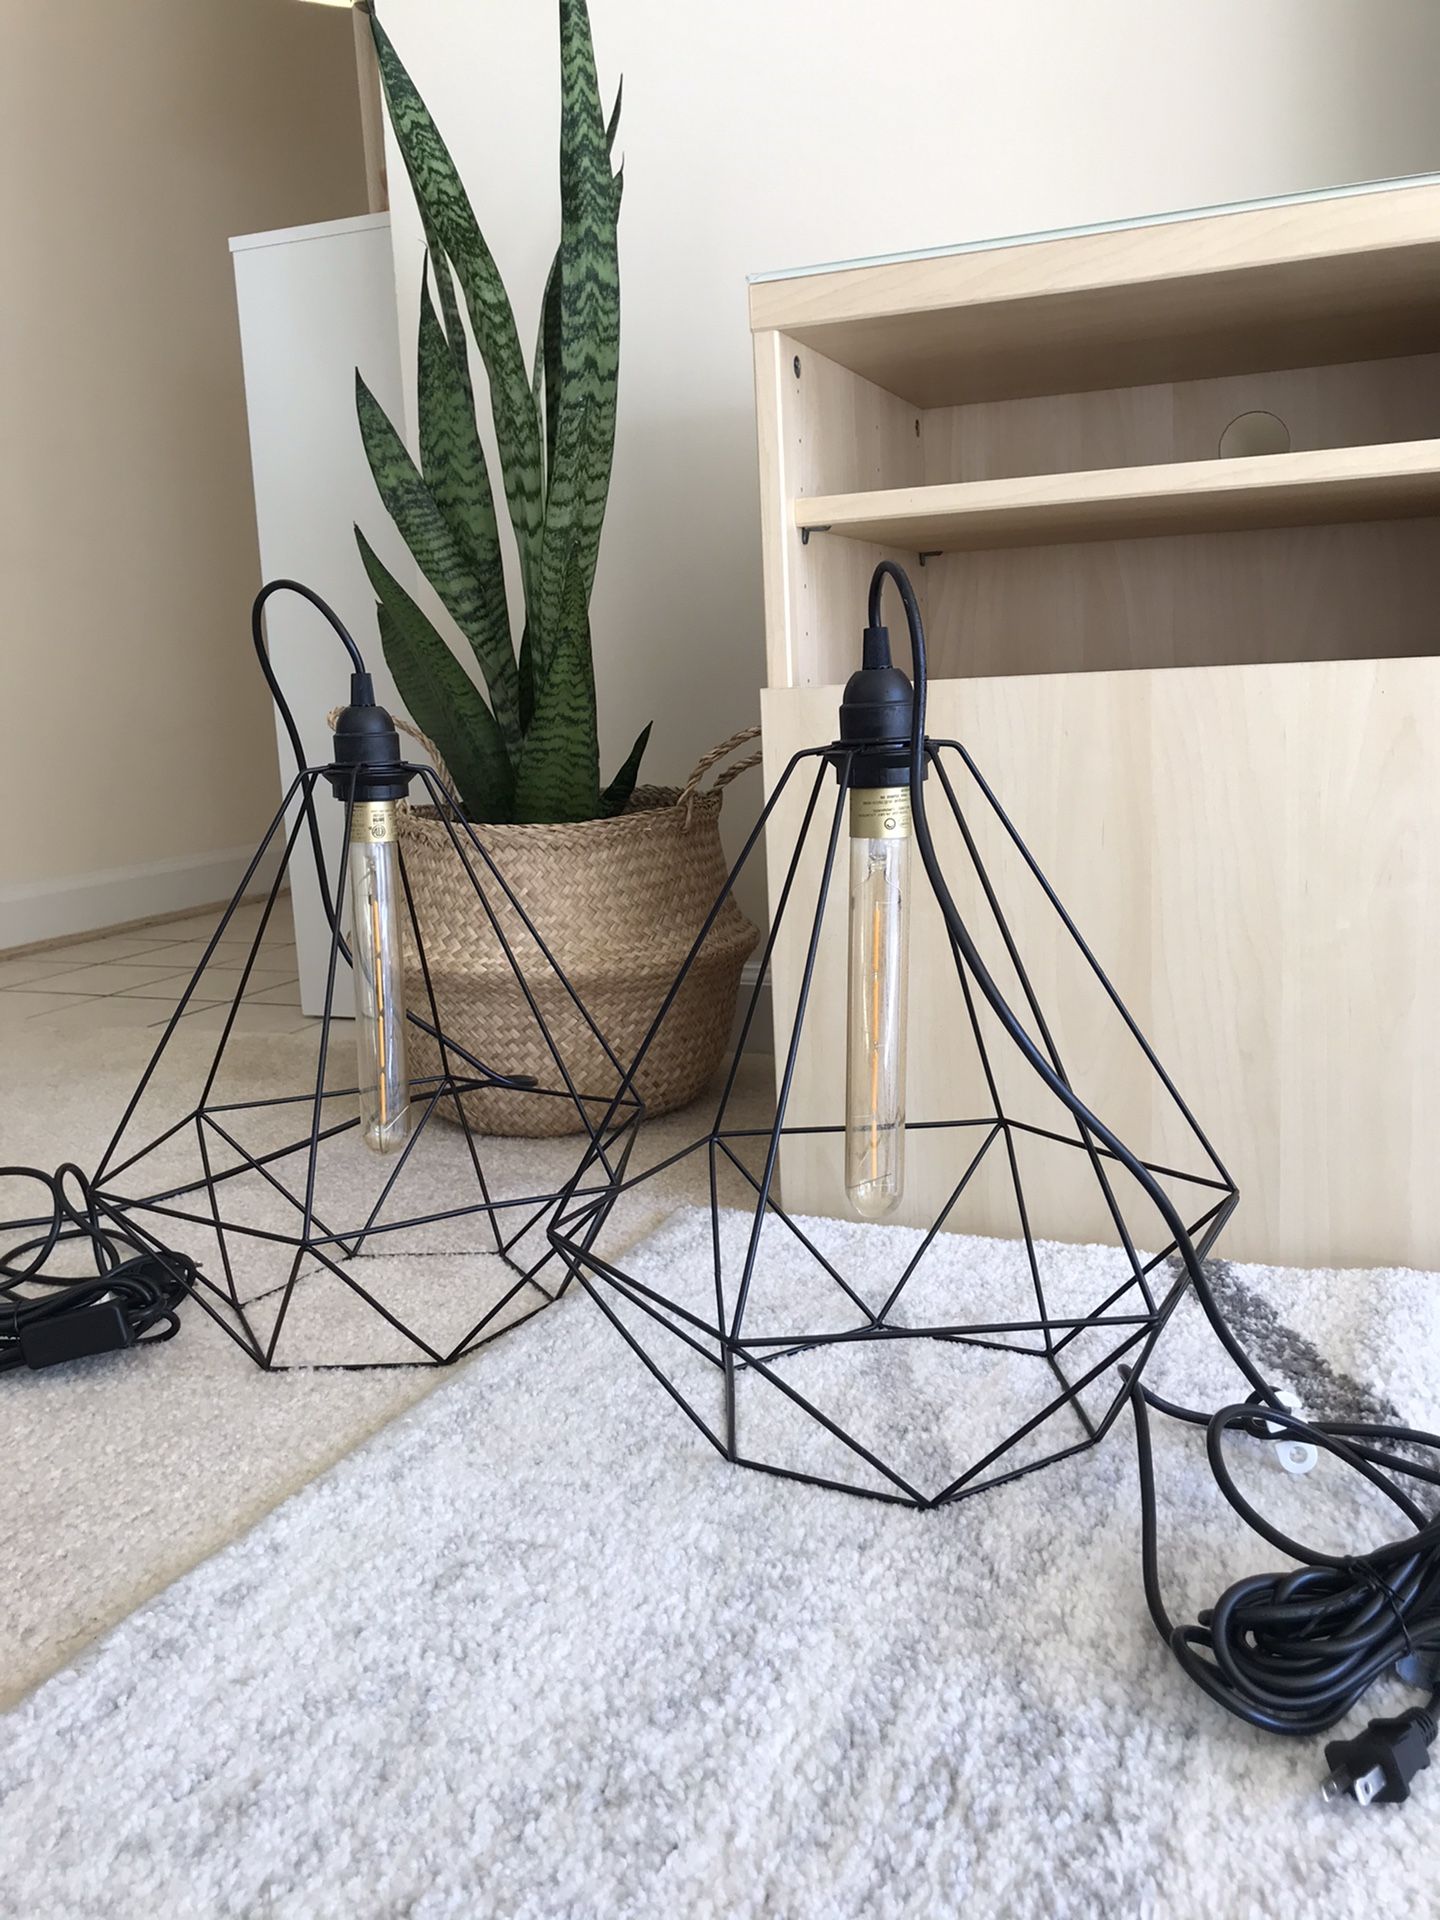 Ikea pendant lamps and Edison style light bulbs